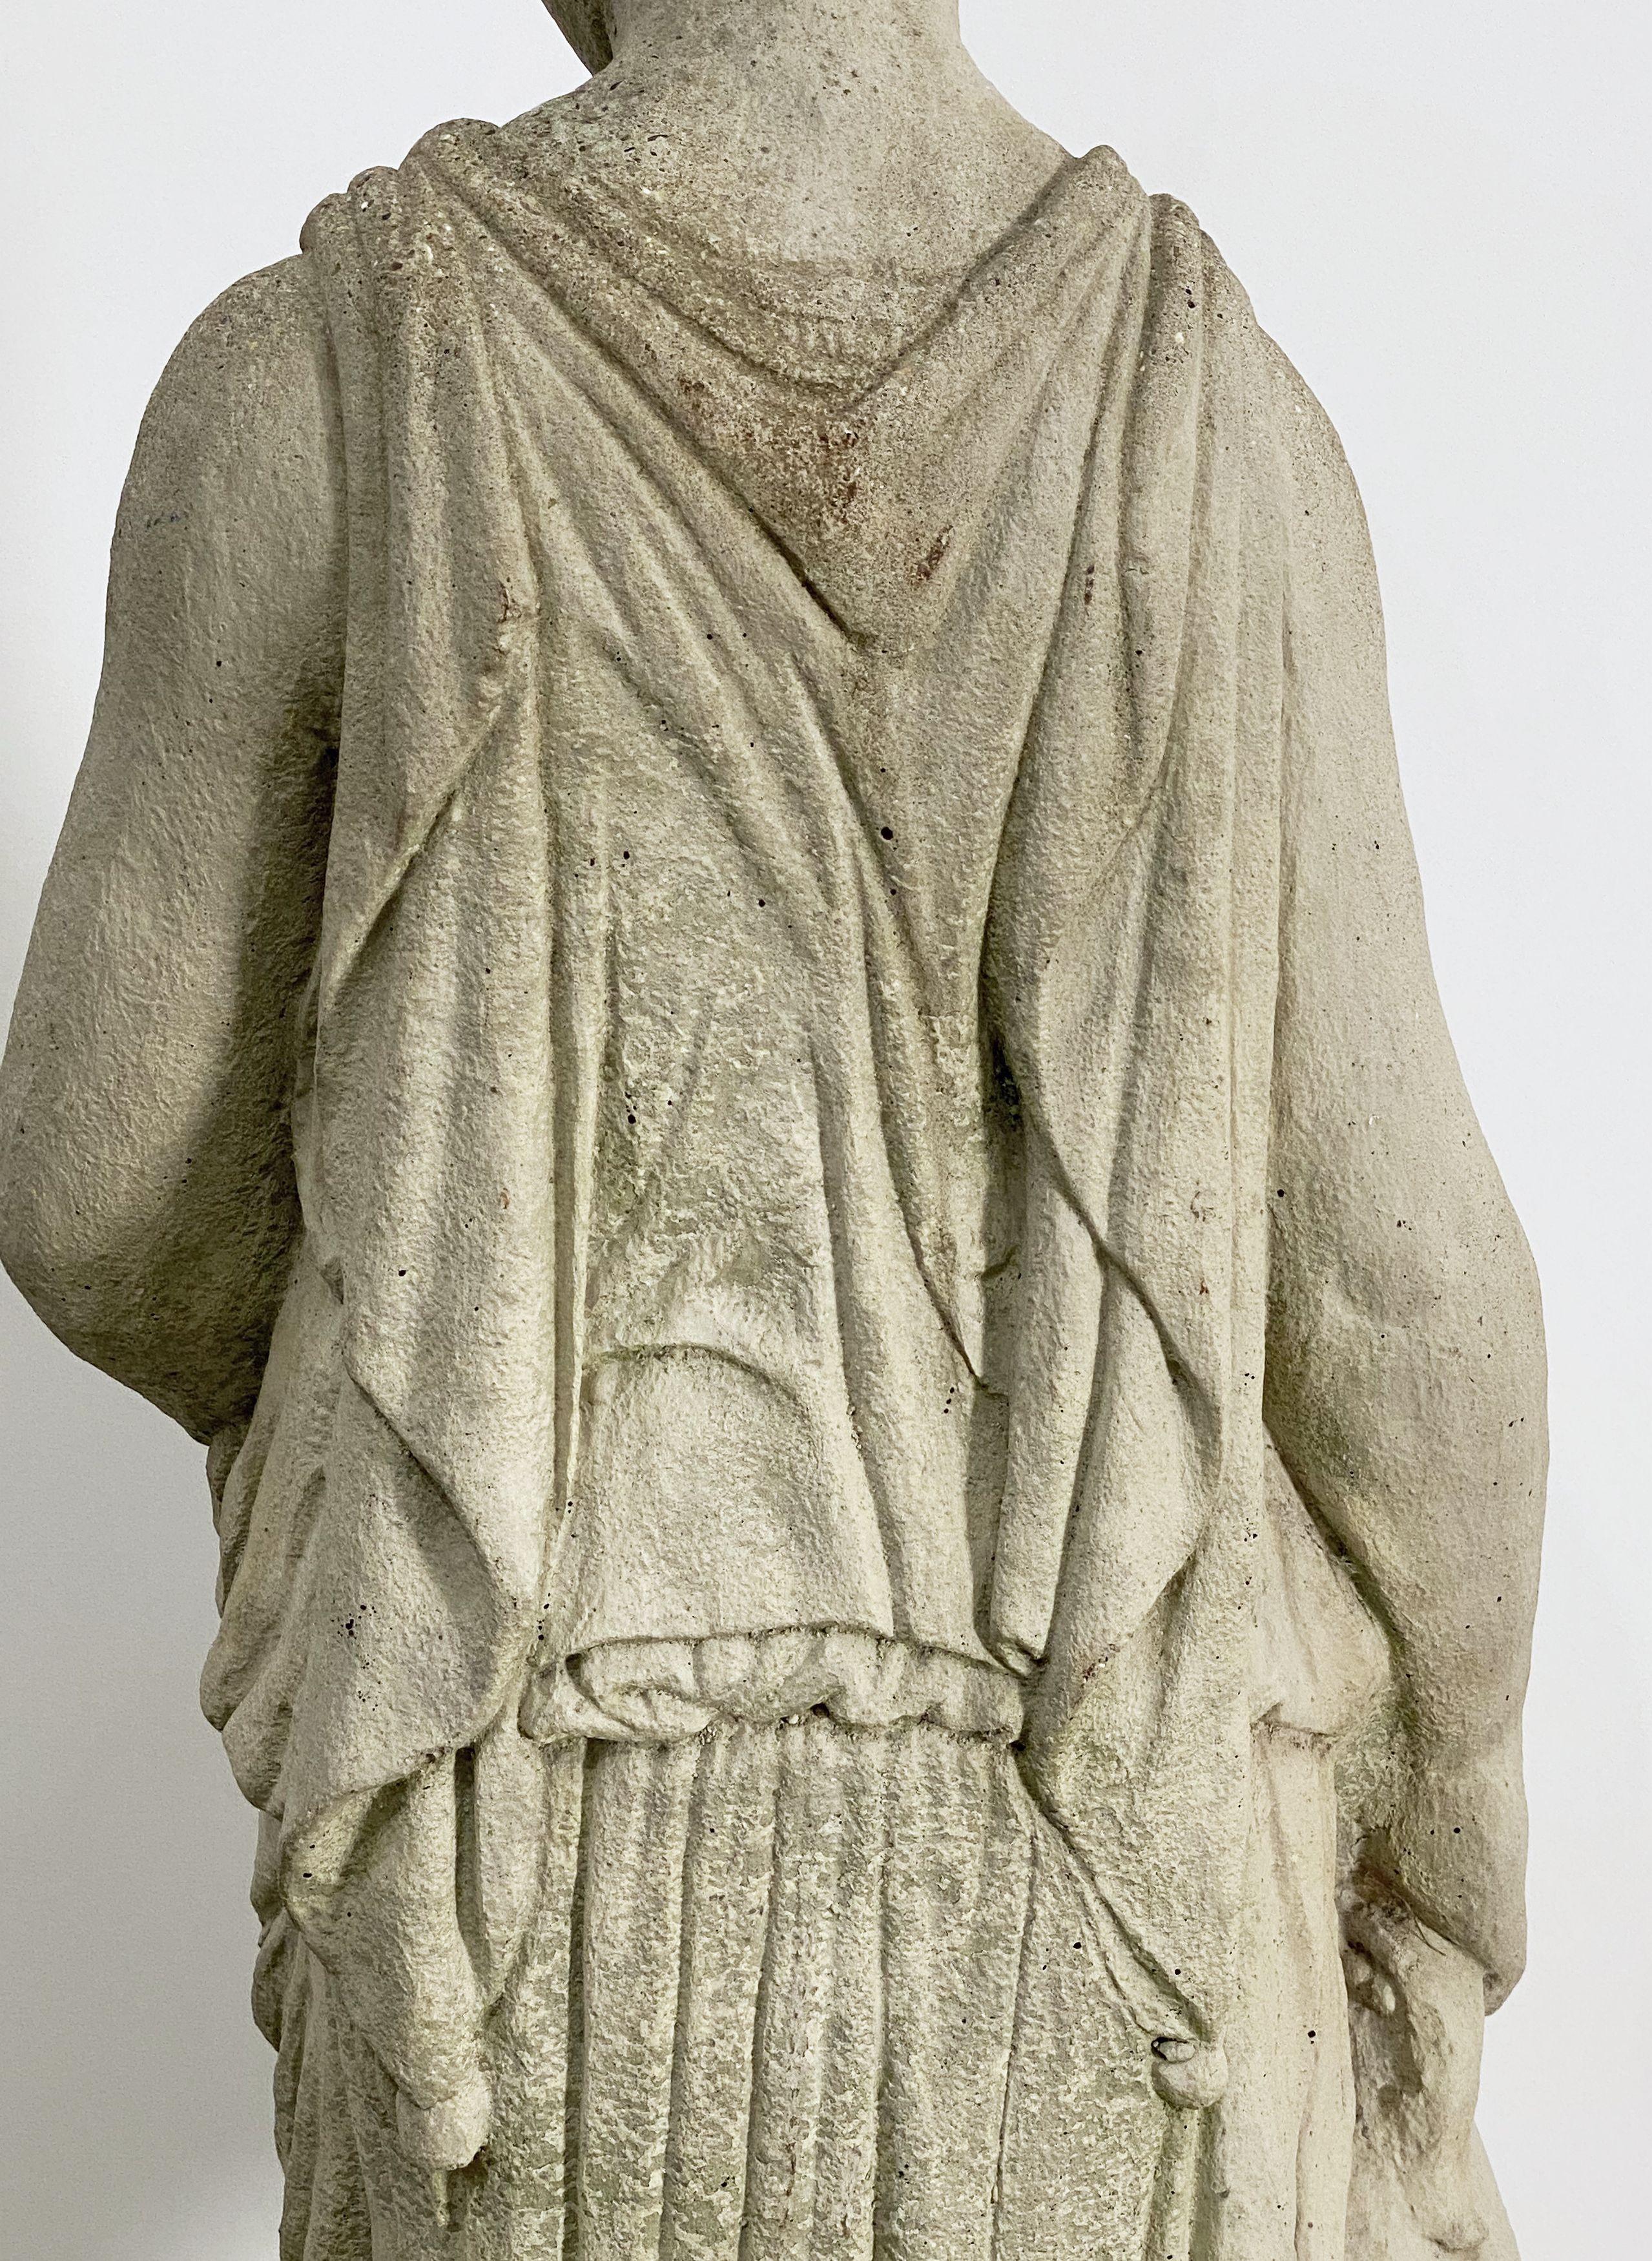 Large English Garden Stone Statue of a Maiden on Column Pedestal (H 59 1/4) 9